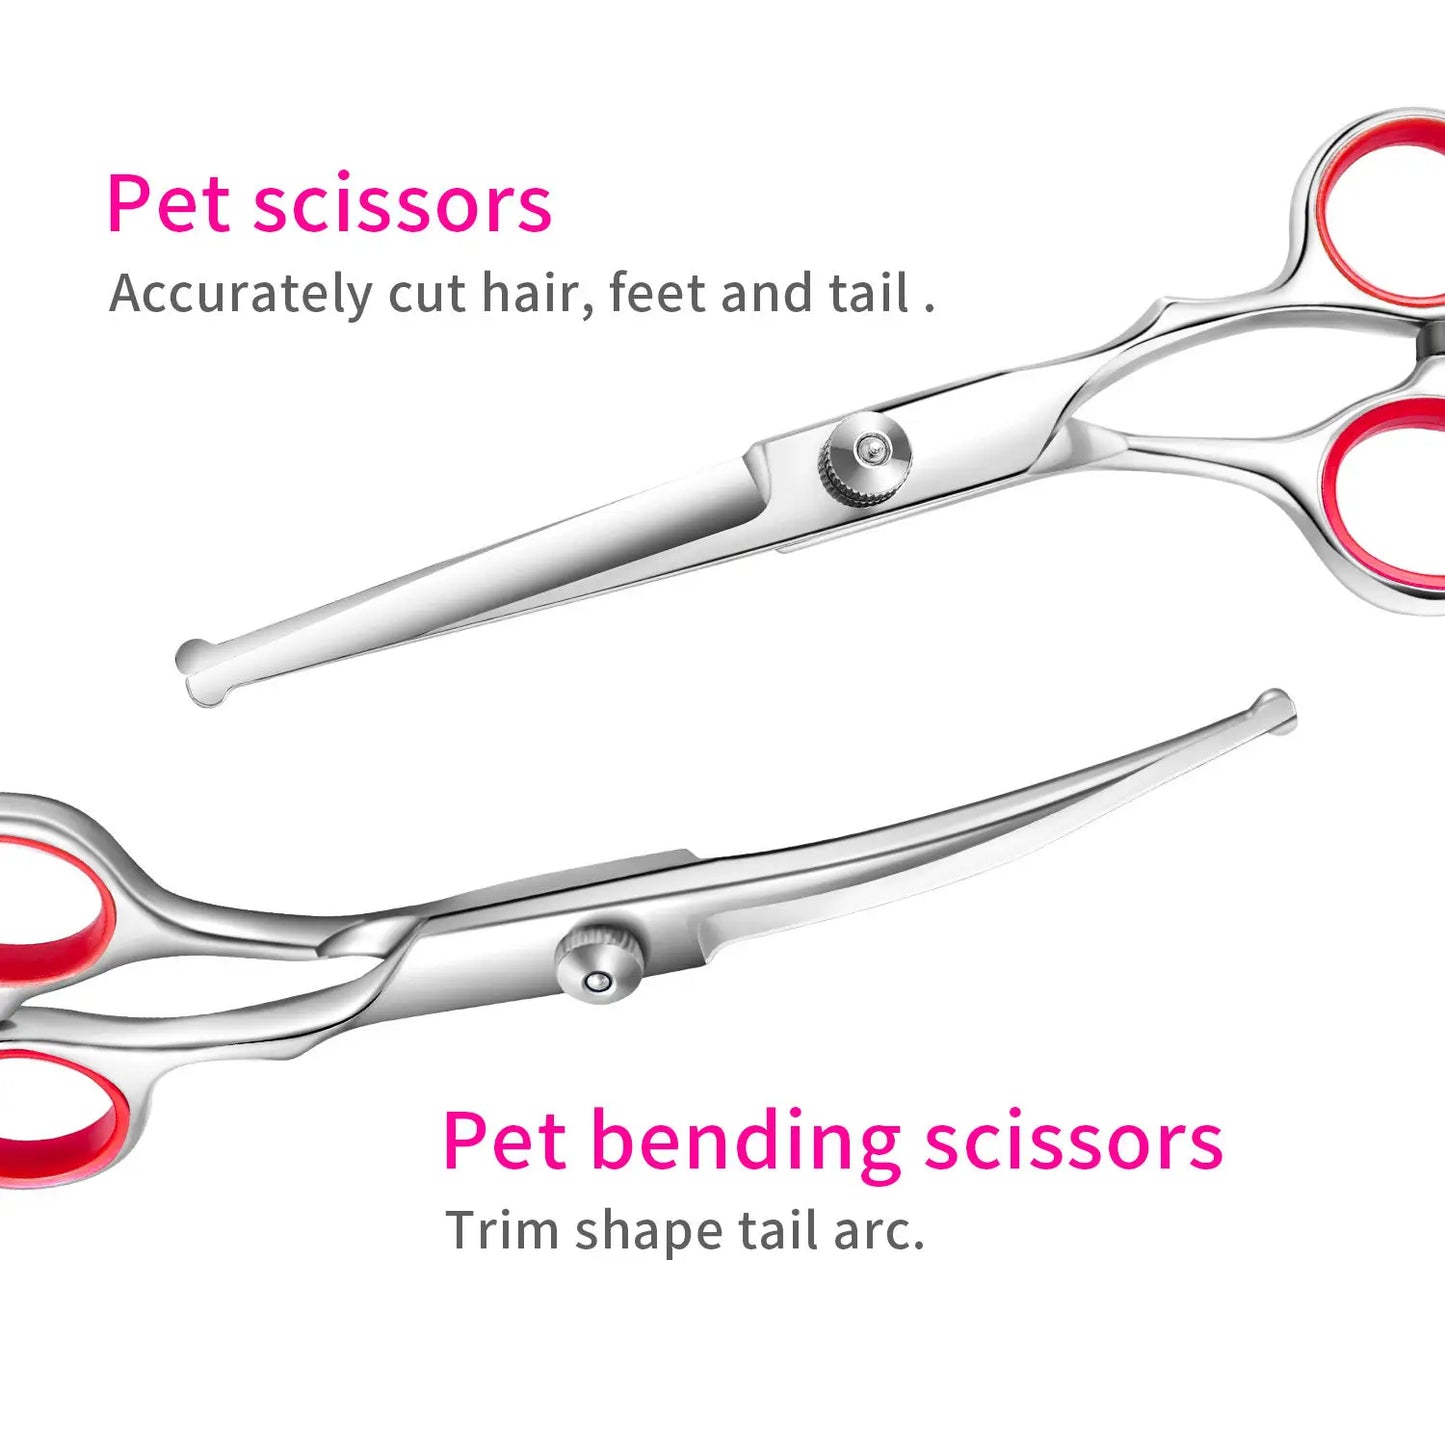 Dog Grooming Scissors Stainless Steel Pet Hair Cutting Scissors Kit